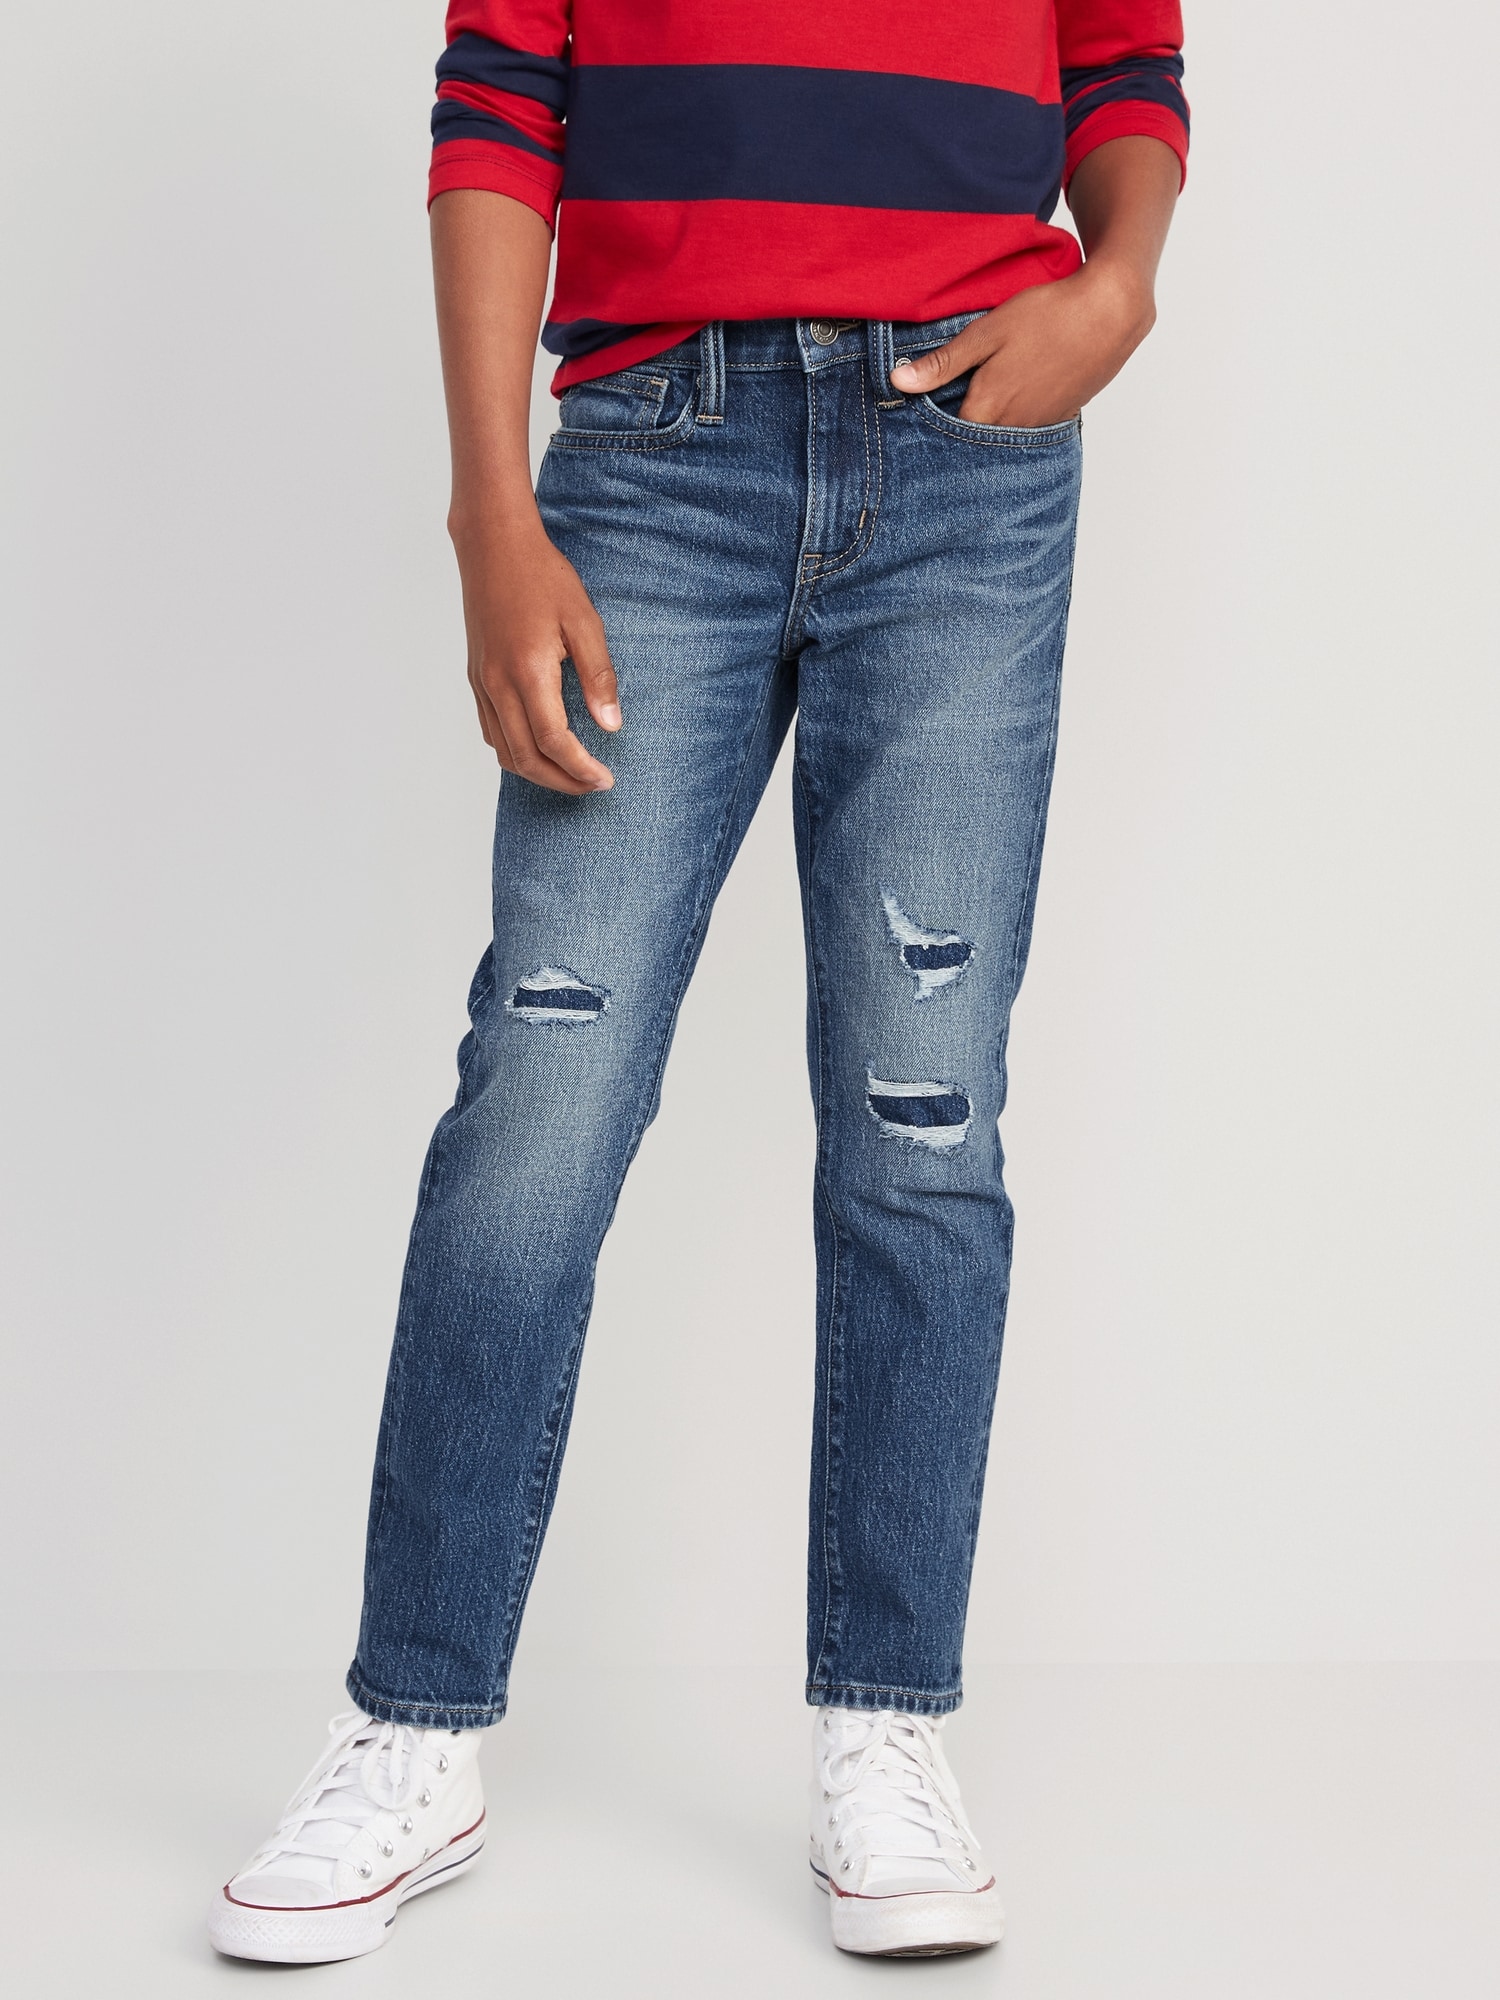 Original Taper Built-In Flex Jeans for Boys